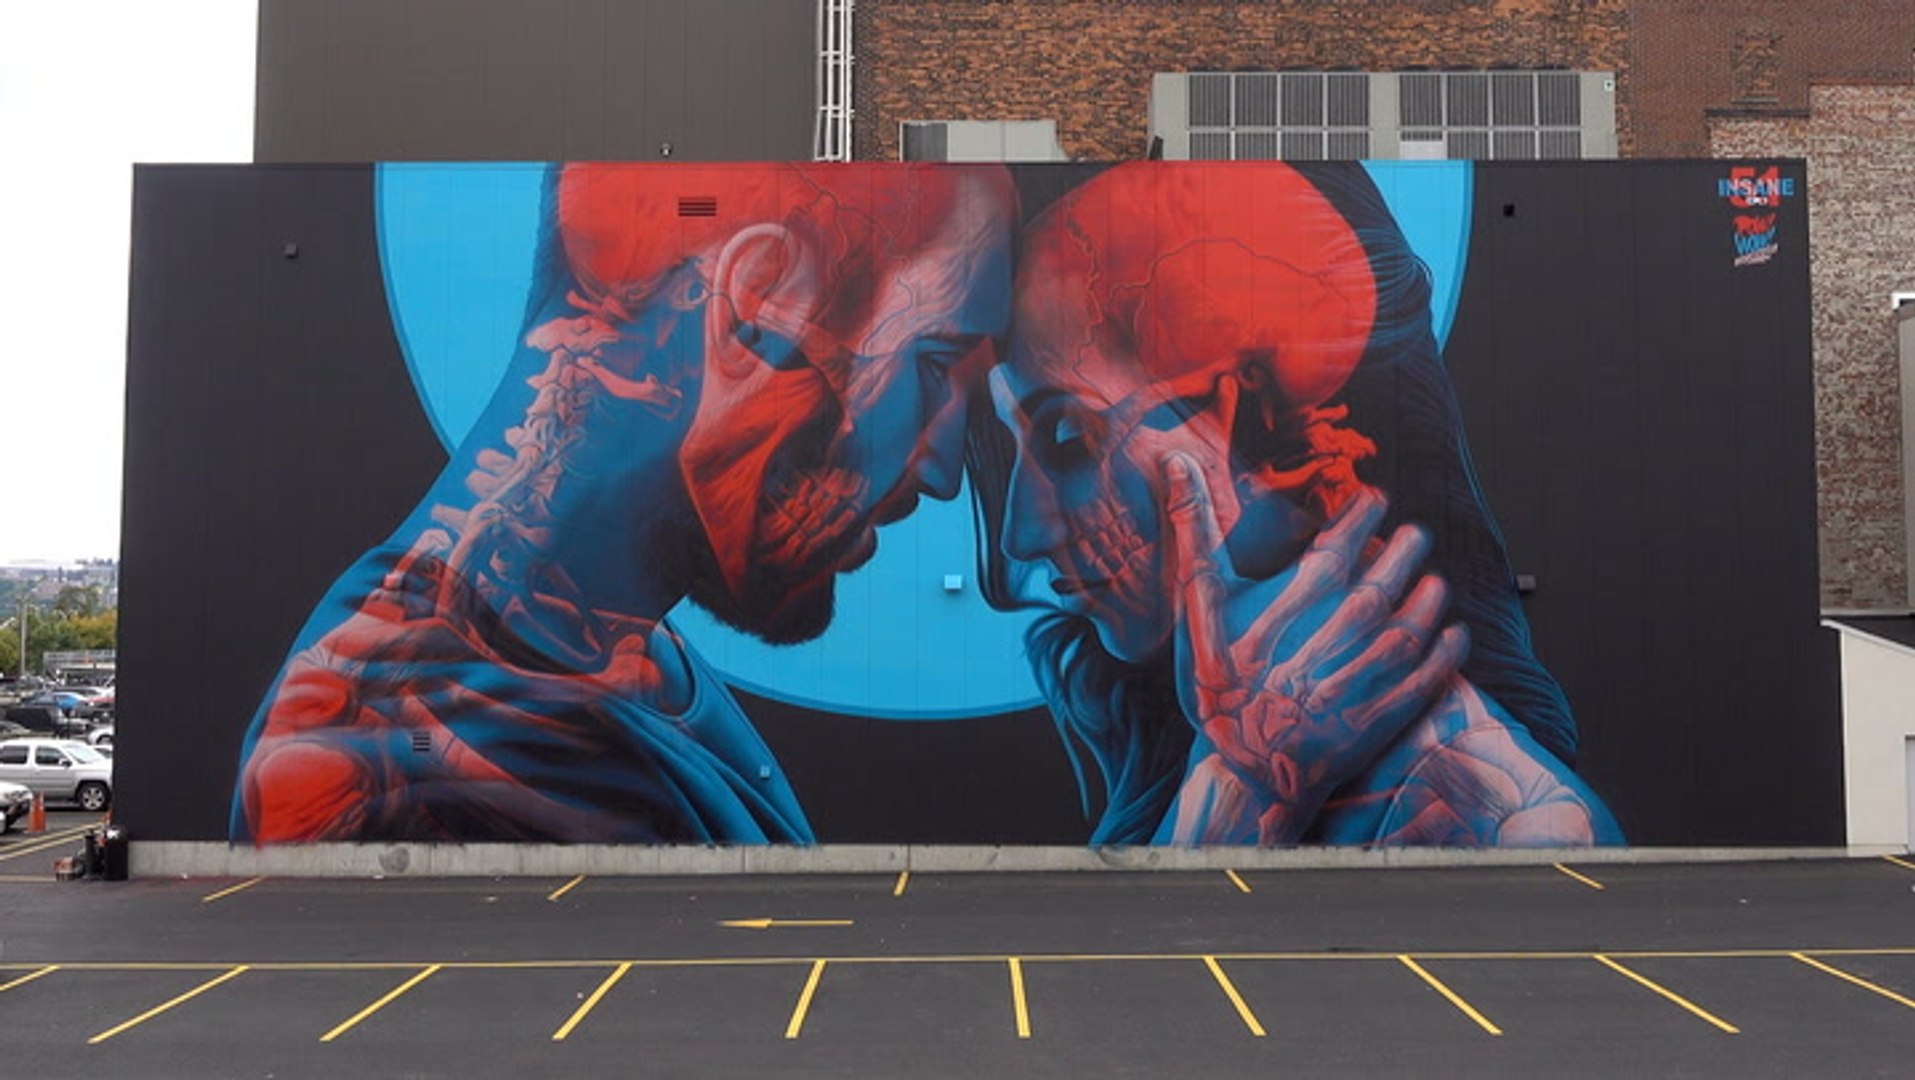 Street art has two paintings hidden in one - video Dailymotion